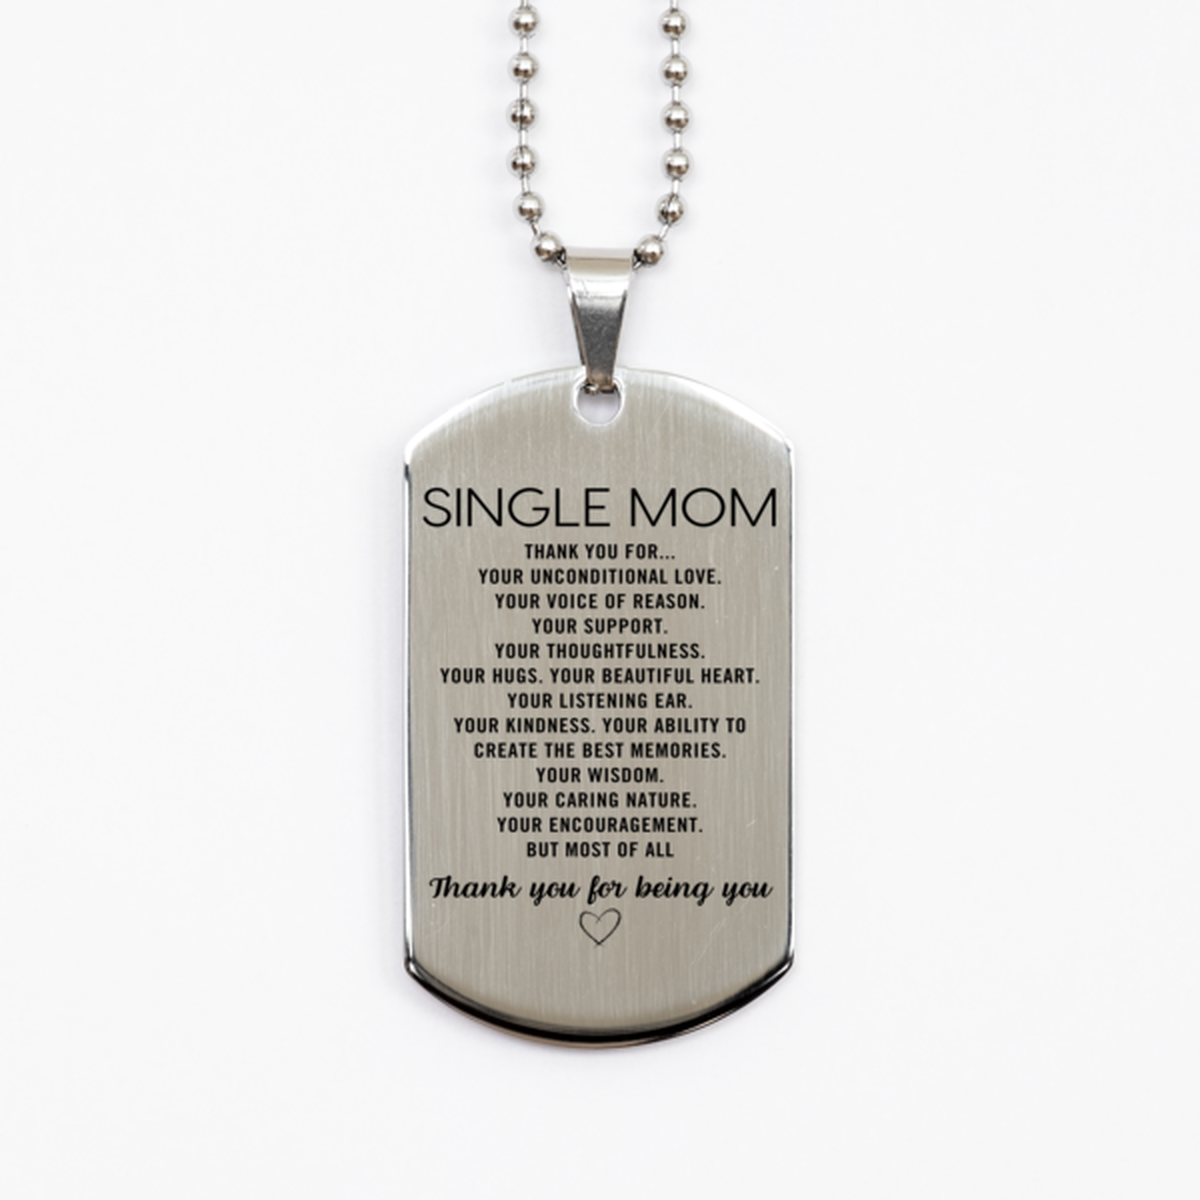 Single Mom Silver Dog Tag Custom, Engraved Gifts For Single Mom Christmas Graduation Birthday Gifts for Men Women Single Mom Thank you for Your unconditional love